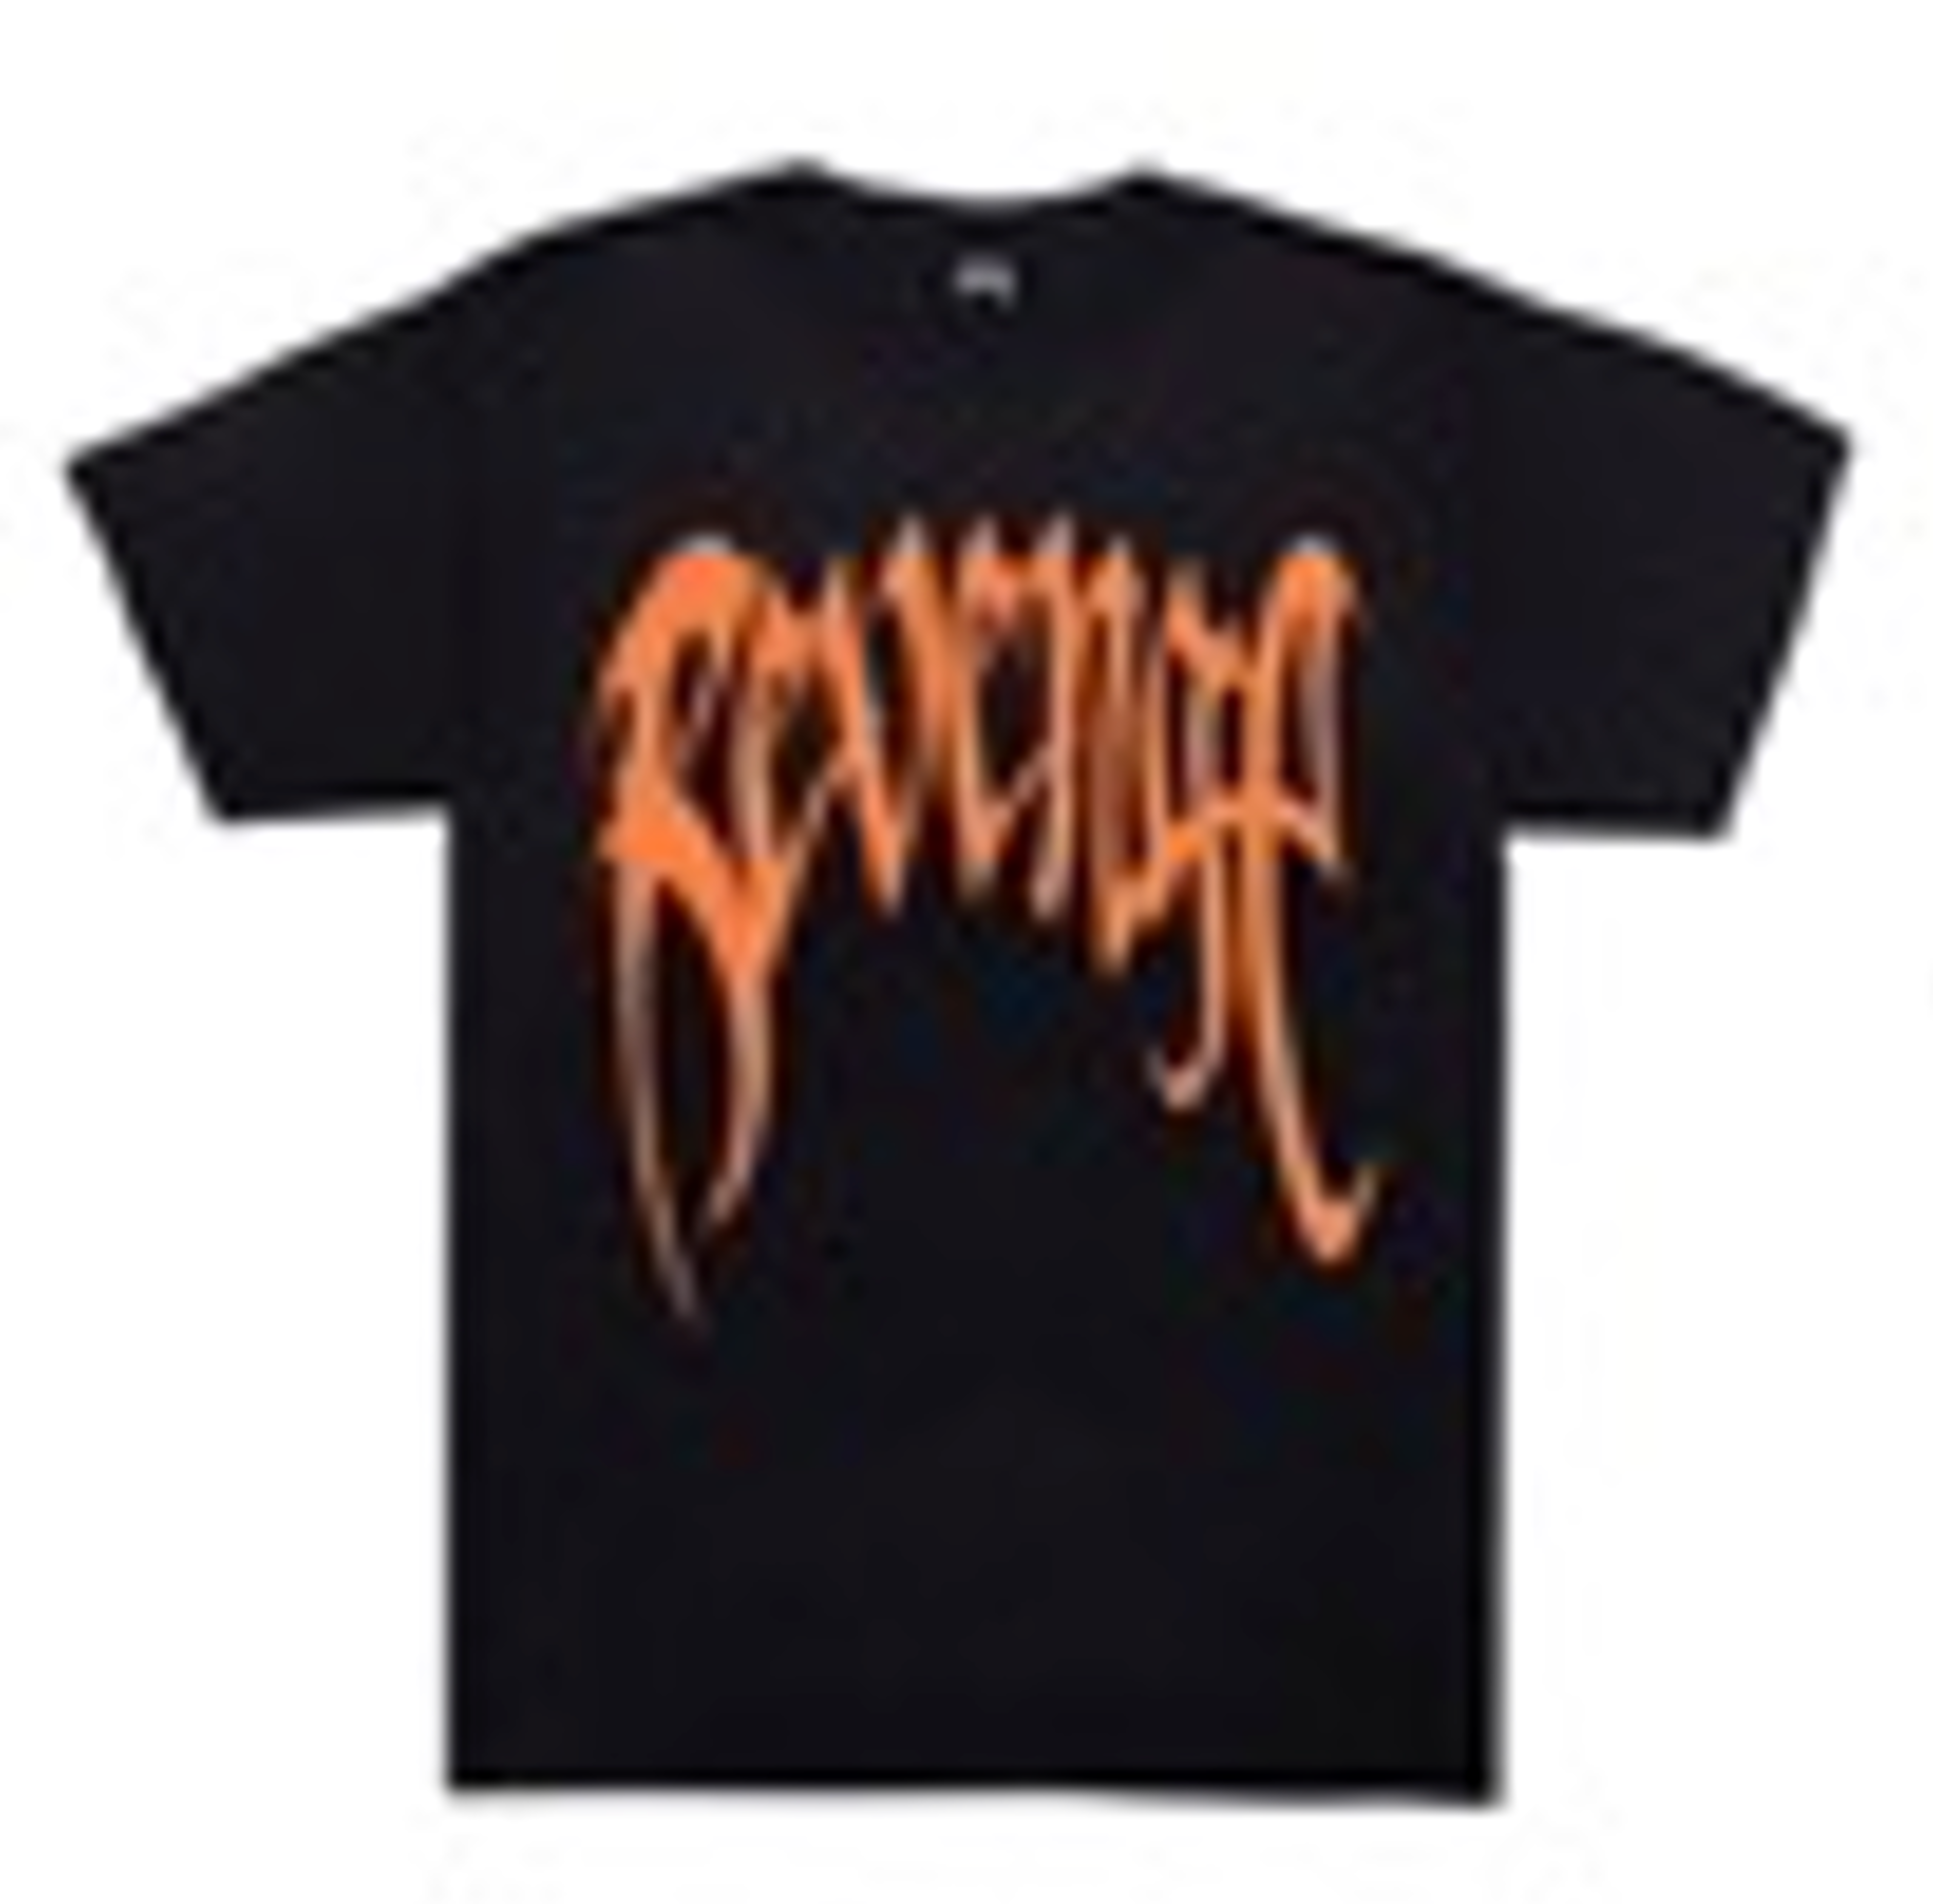 Alternate View 1 of Revenge Orange Arch T-Shirt - Black